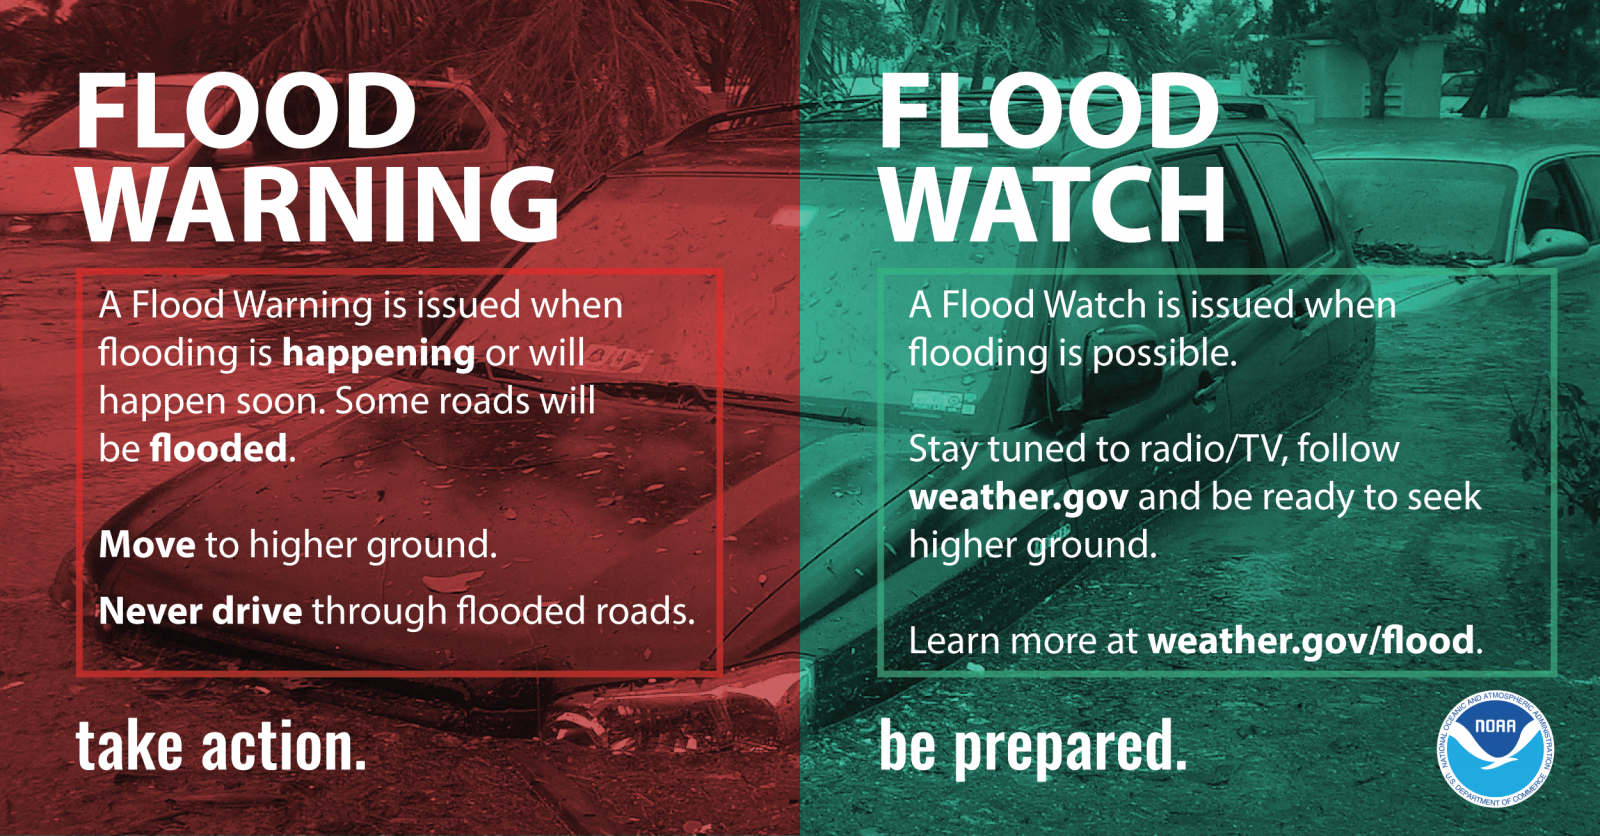 Flood Warning vs Watch